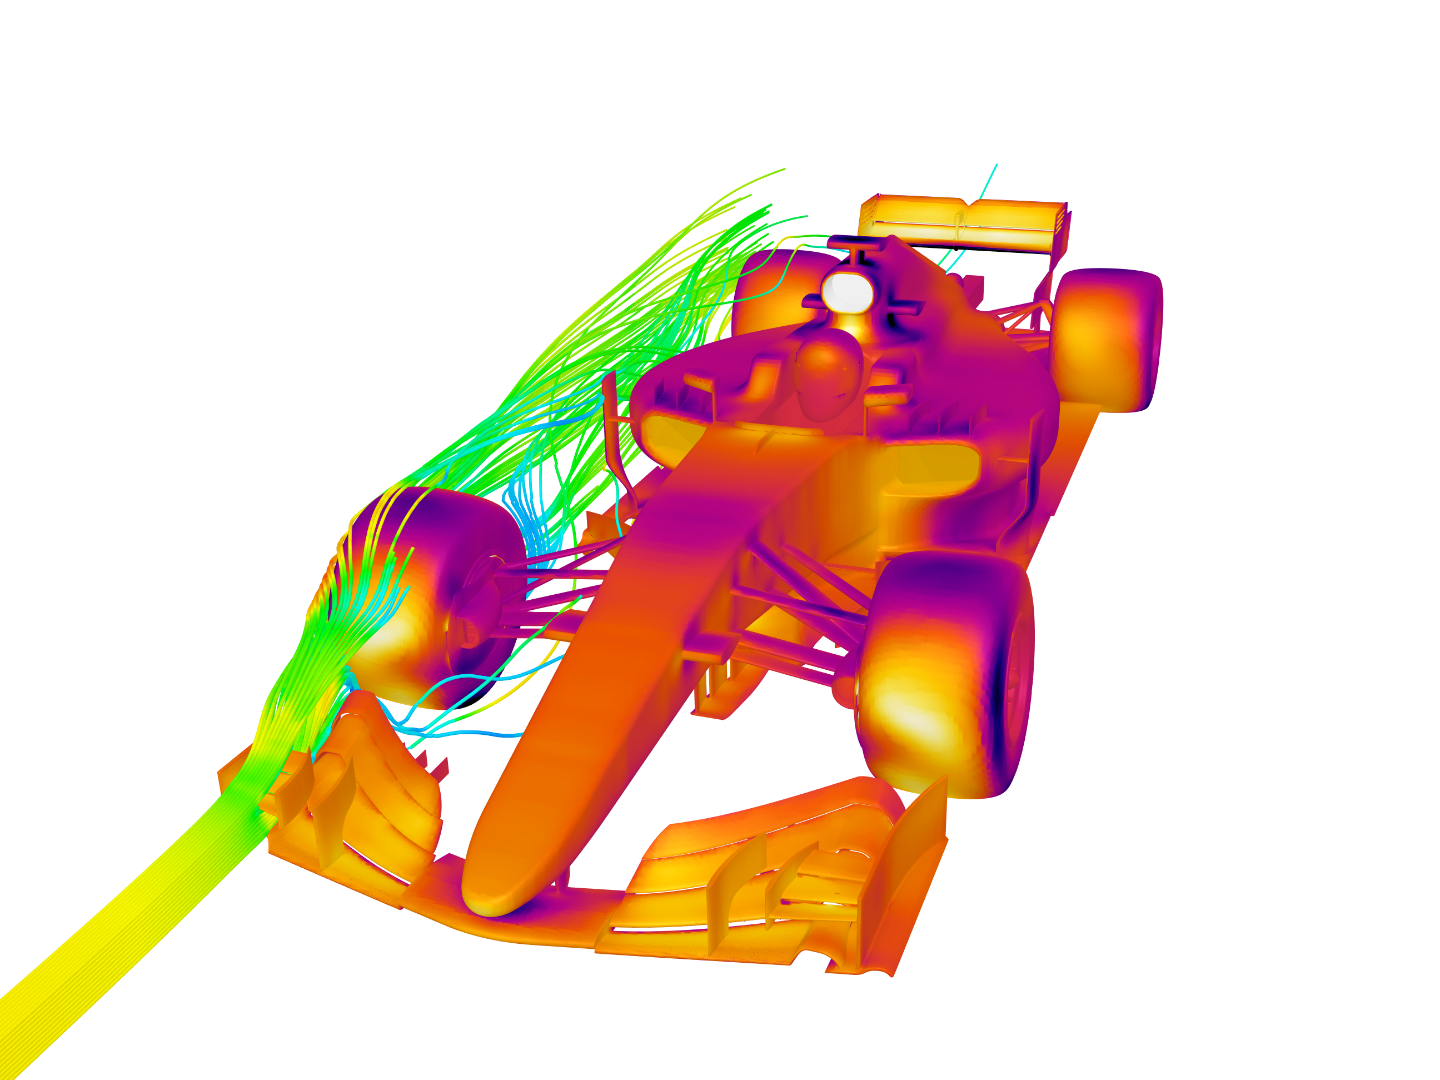 2017 Spec F1 Aero Analysis image